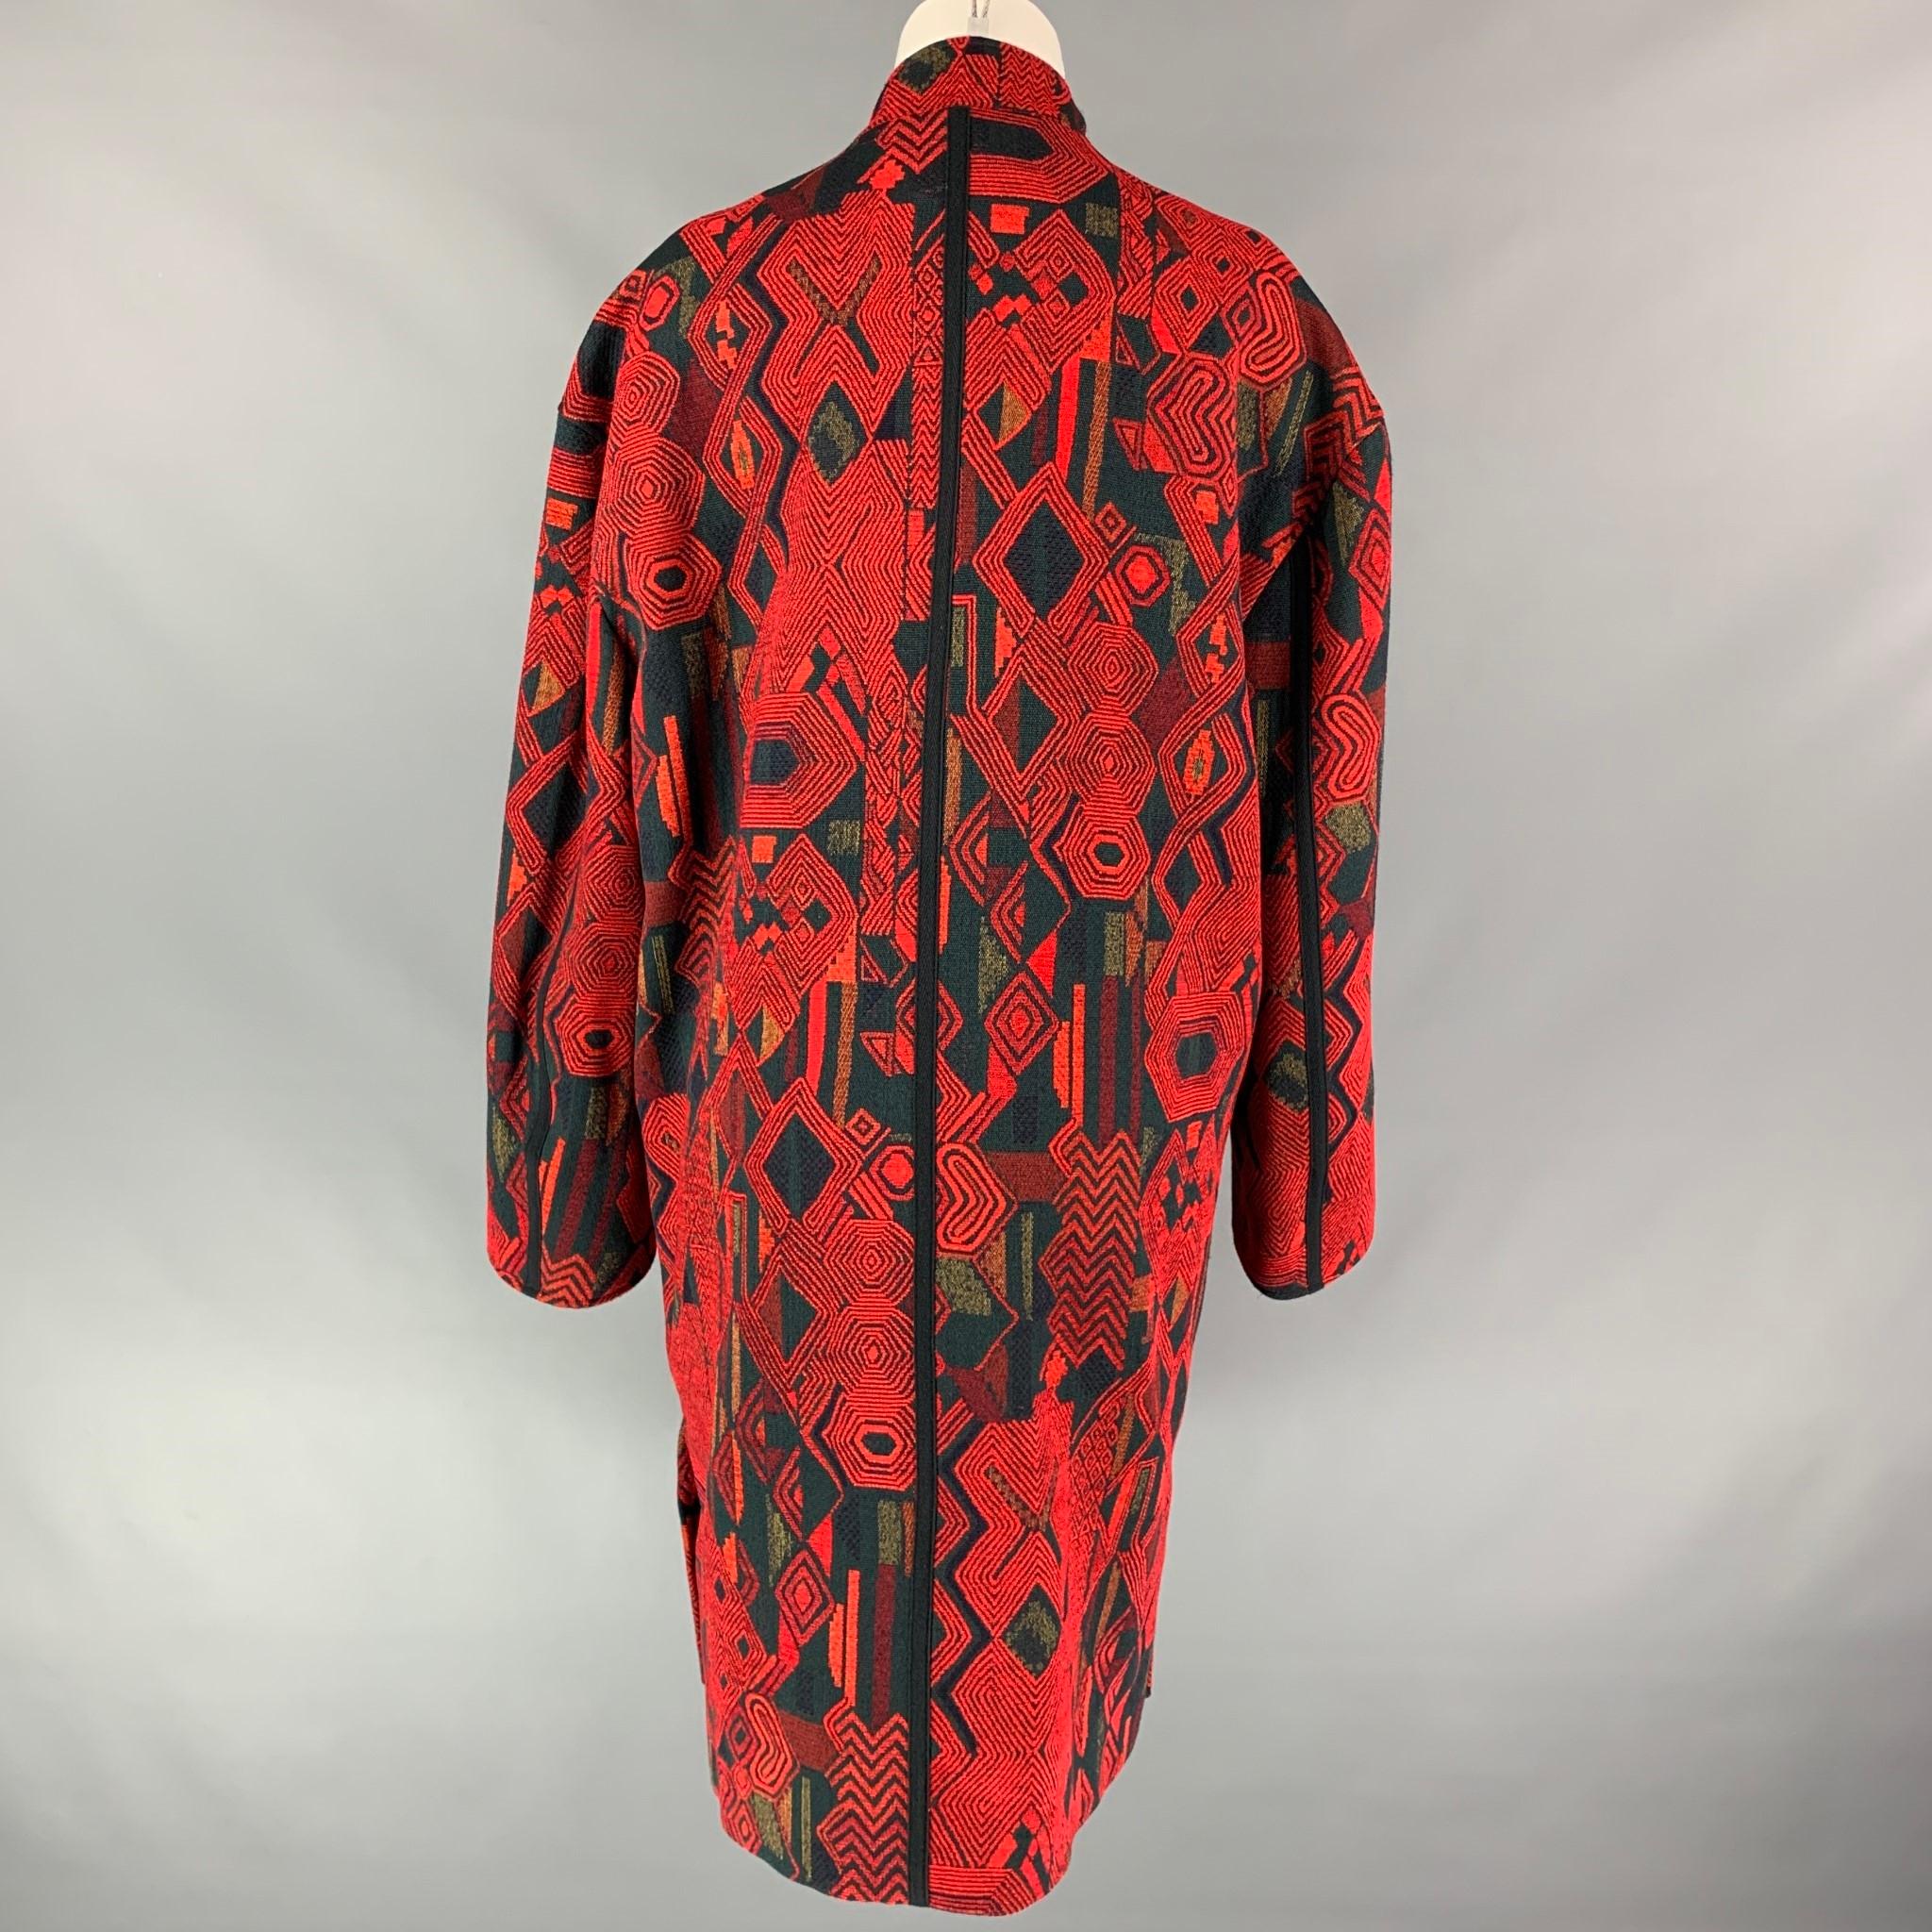 Women's DEREK LAM Size 6 Red & Black Geometric Print Acrylic Blend Collarless Coat